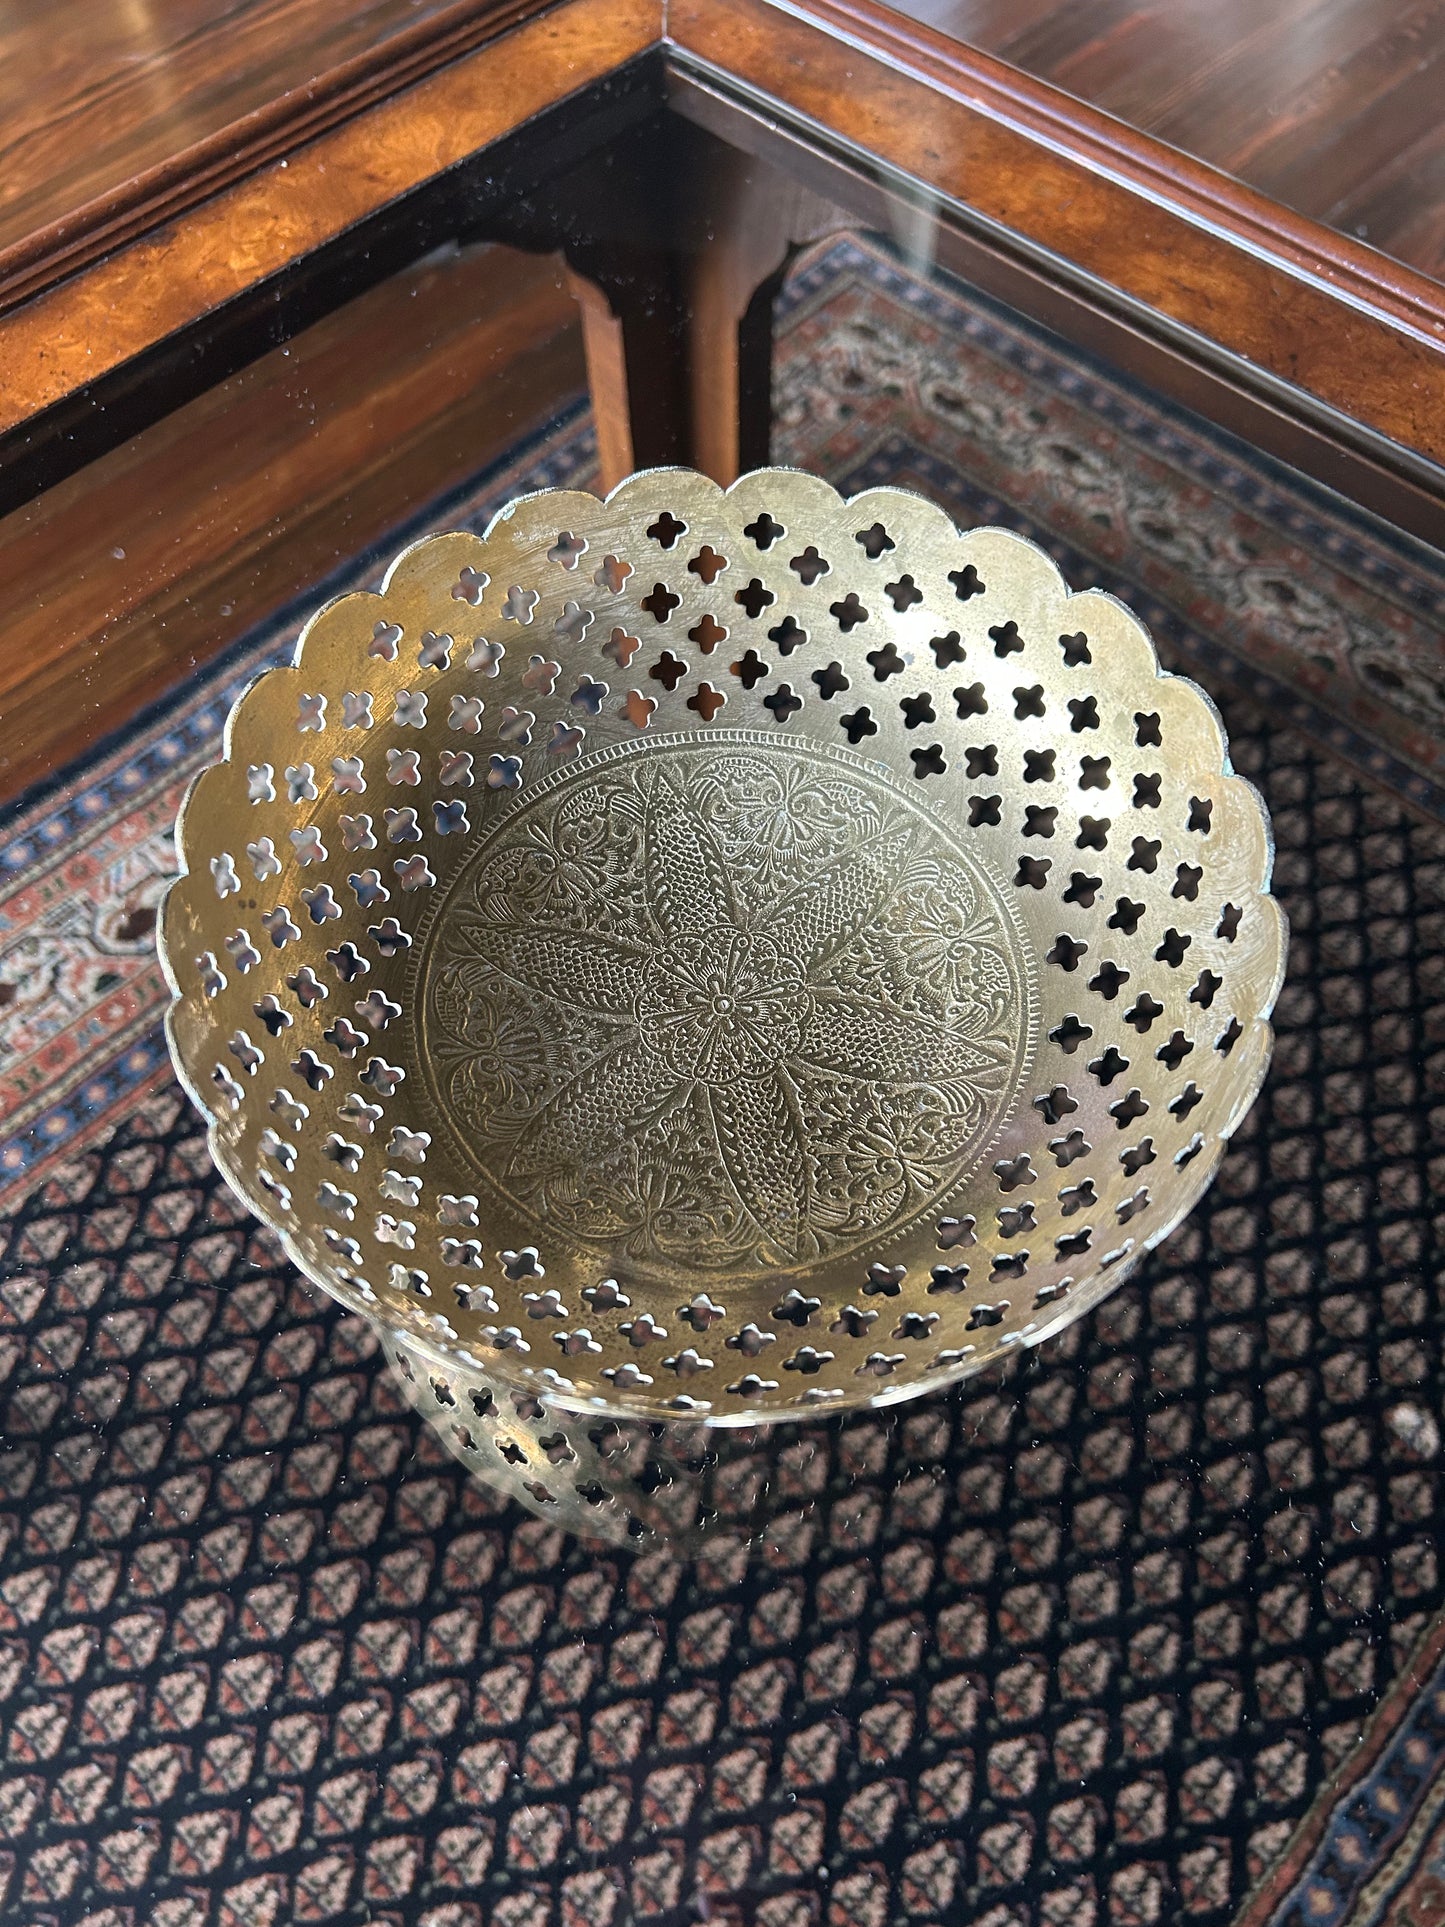 ornate brass bowl with intricate cutouts